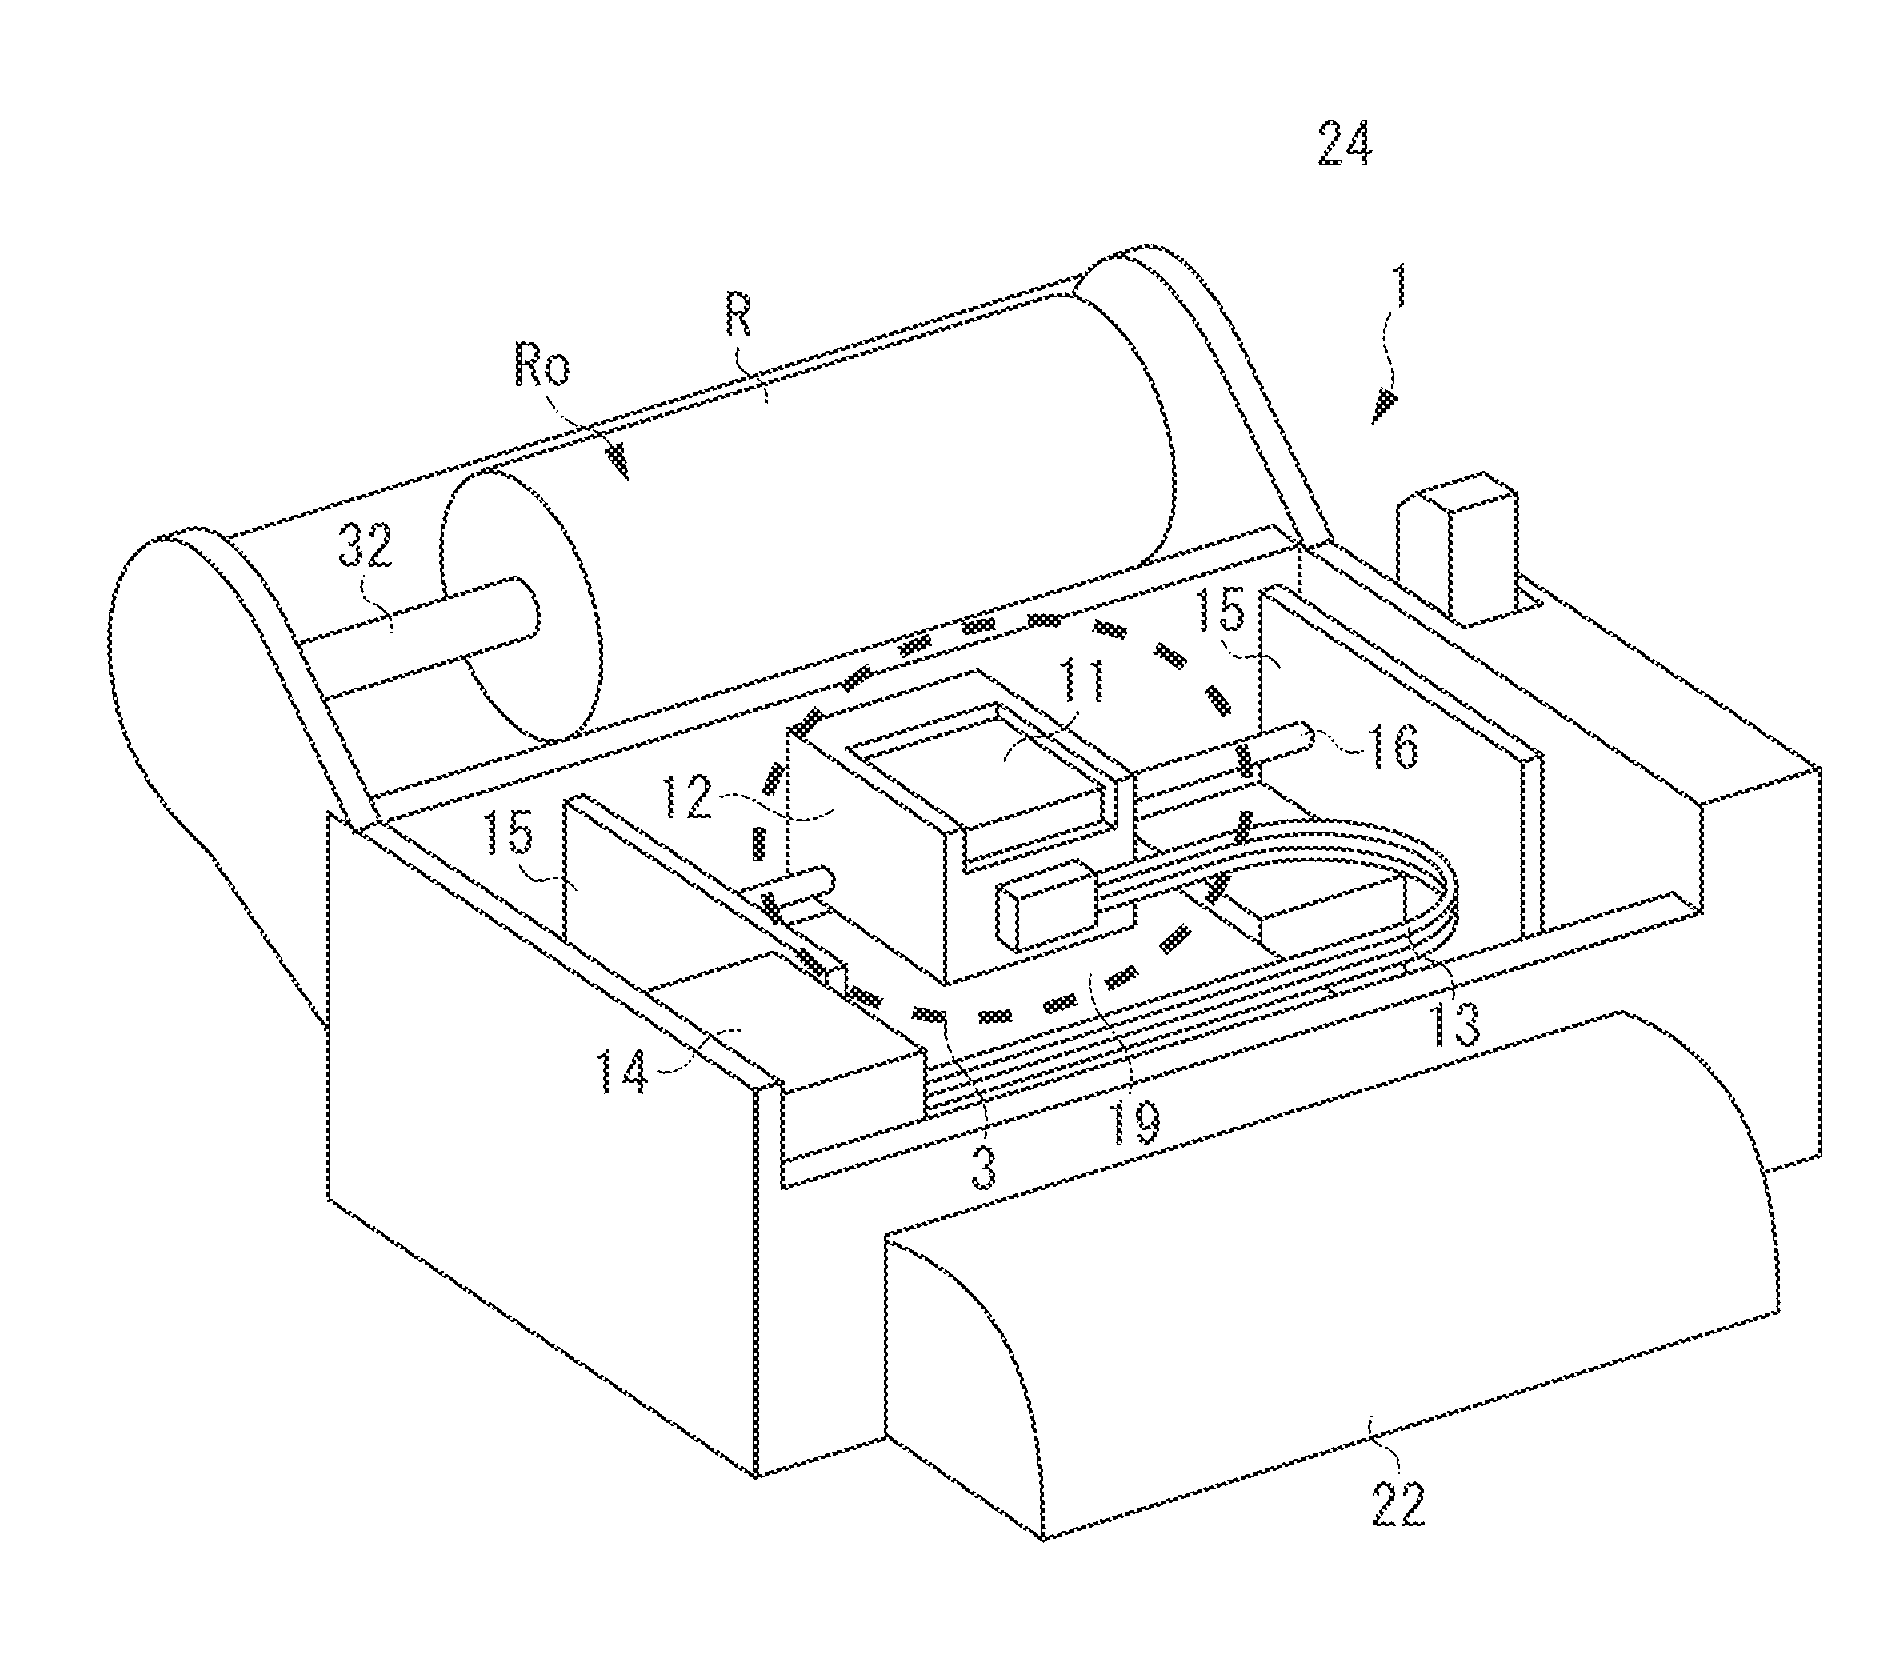 Conveyance apparatus and printer